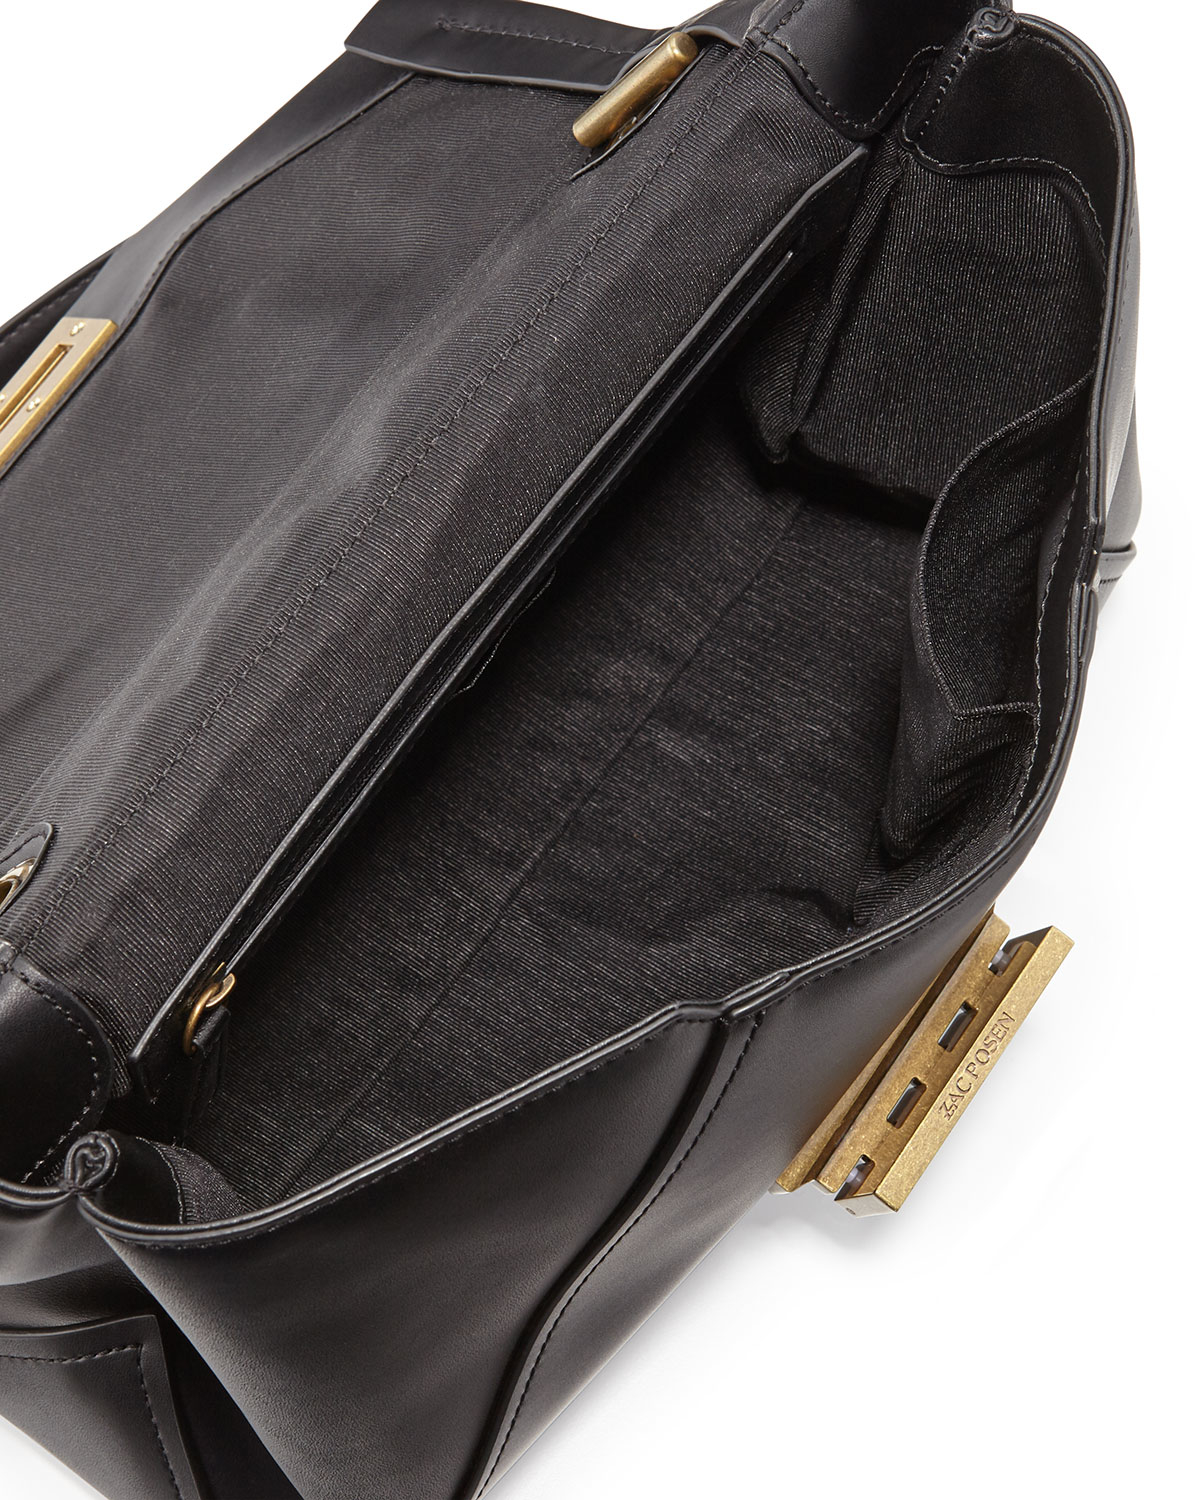 Lyst - Zac Zac Posen Eartha Leather Envelope Shoulder Bag in Black